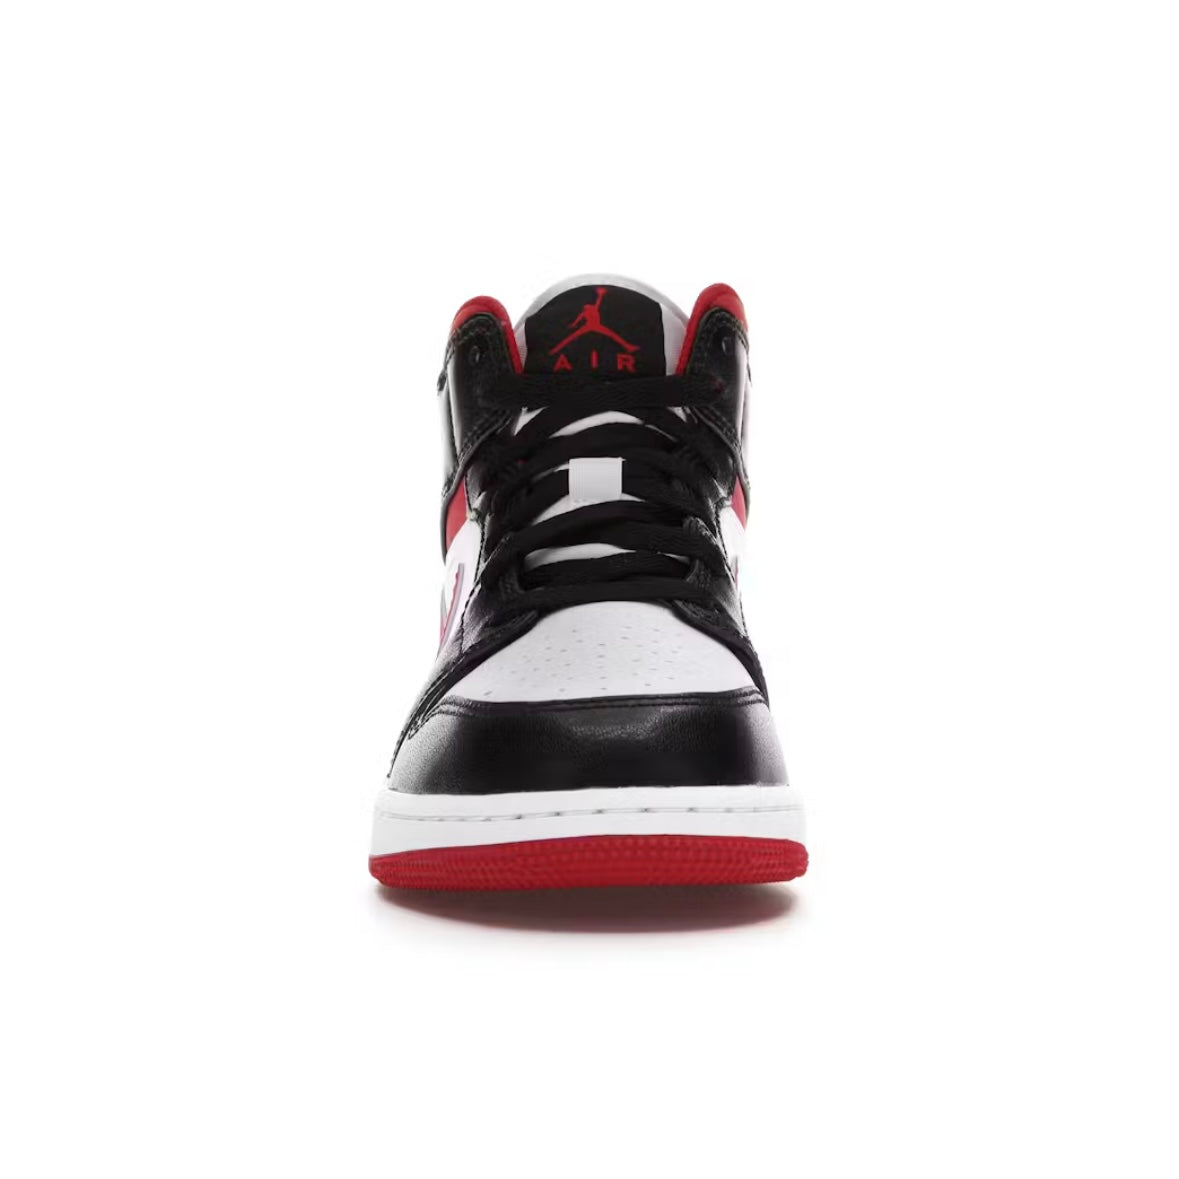 Jordan 1 Mid “Gym Red”